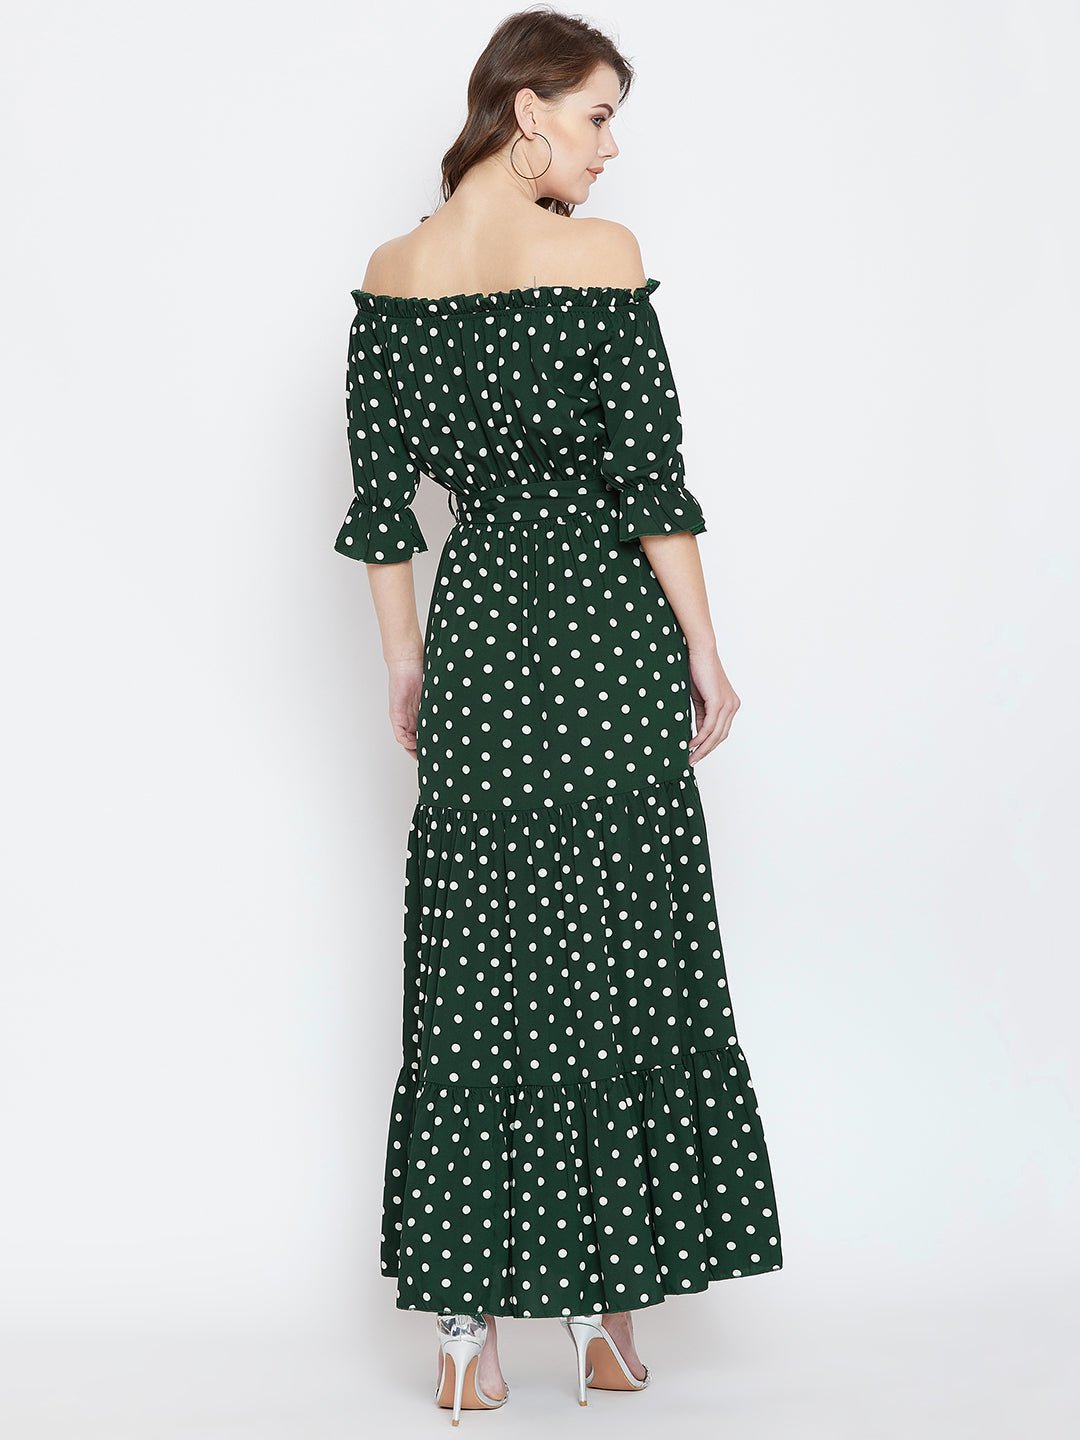 Folk Republic Women Green & White Polka Dot Printed Off-Shoulder Waist Tie-Up Tiered Maxi Dress - #folk republic#